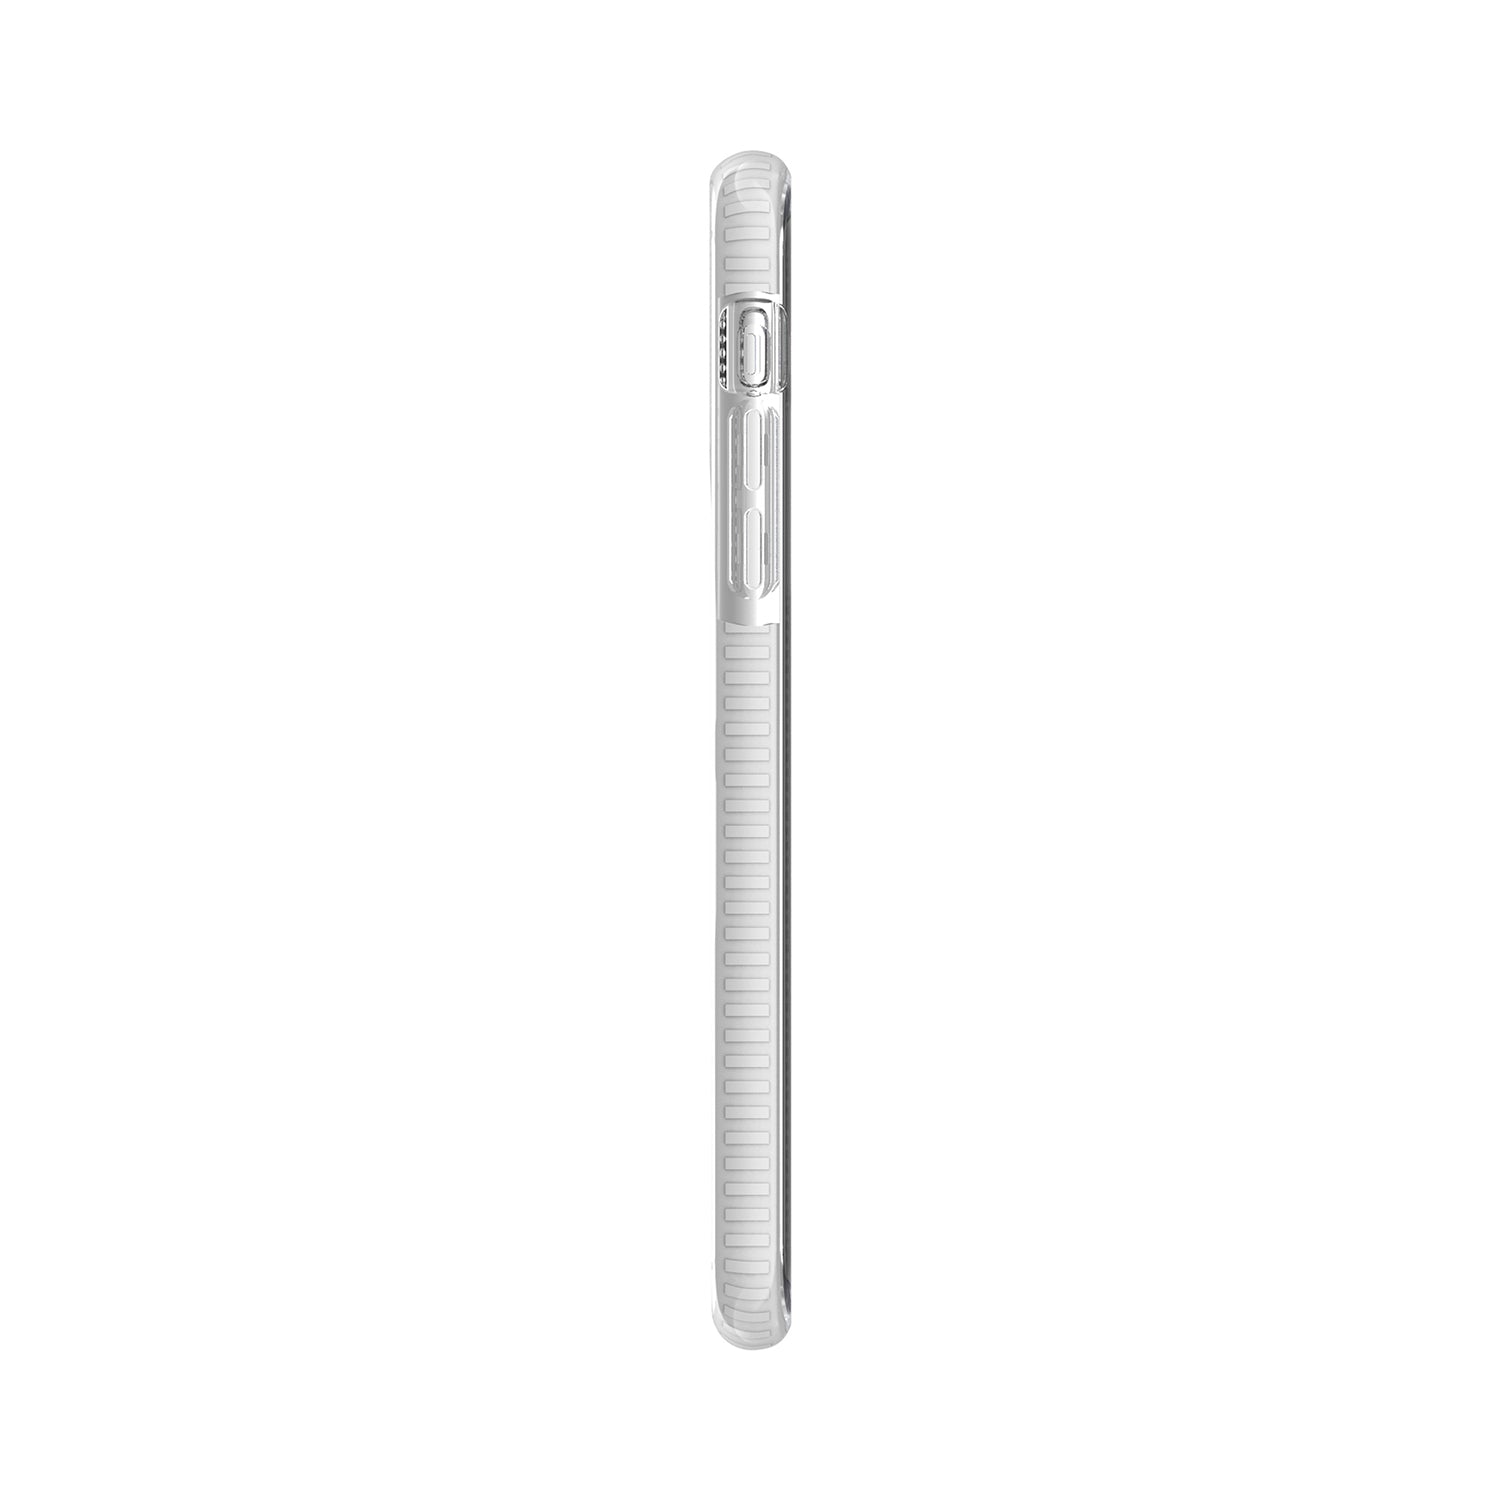 iPhone 13 Pro Transparent TPU Shockproof Drop Resistant Case